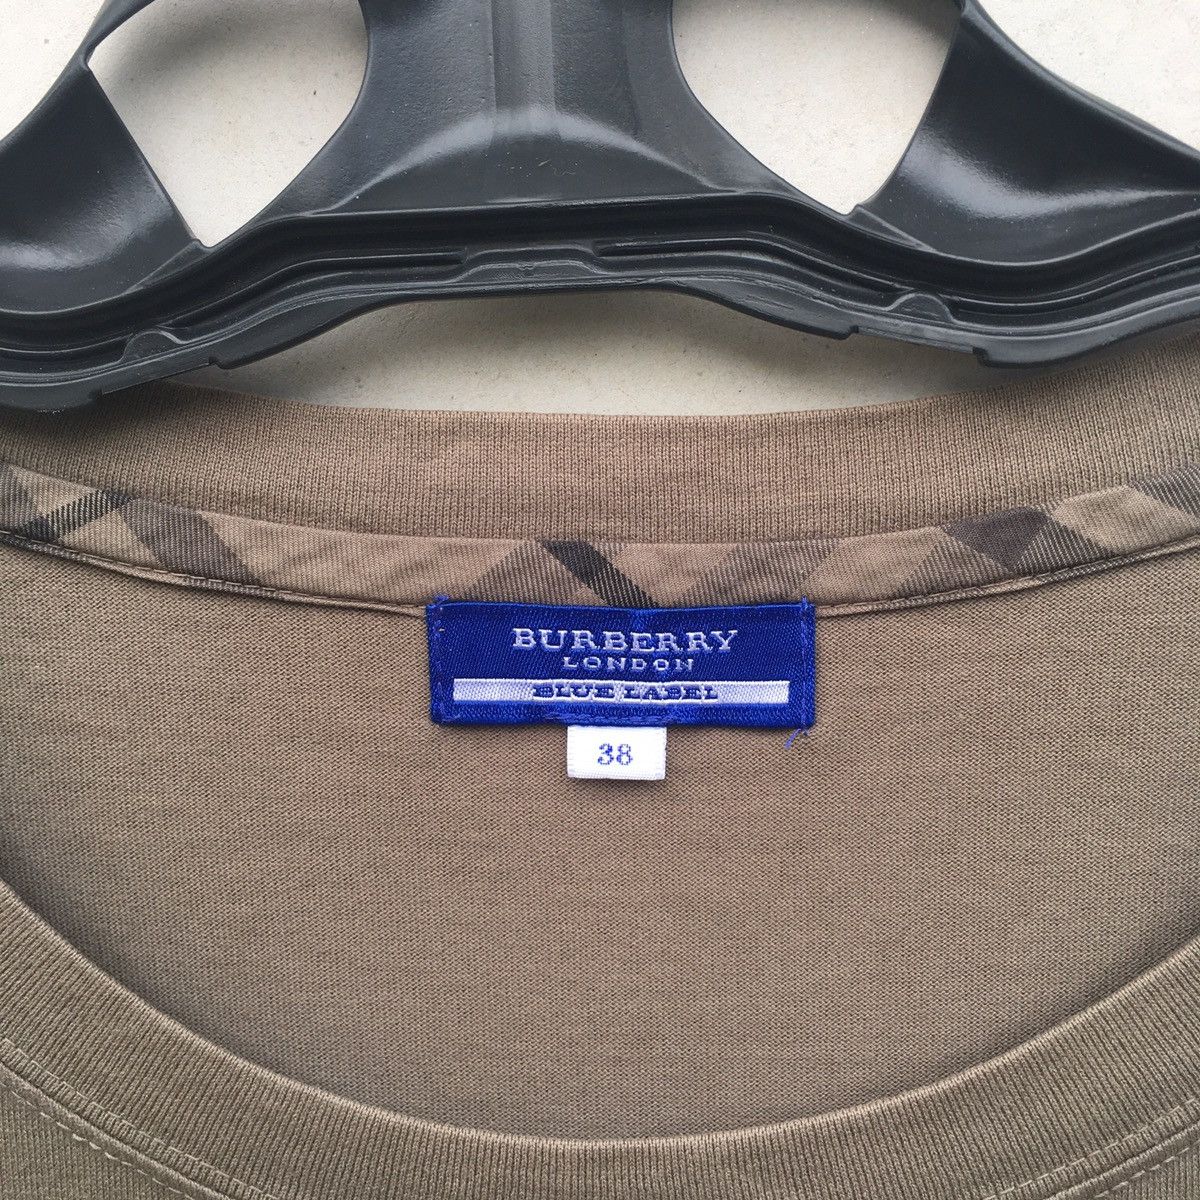 Burberry Burberry London Big Logo short sleeves Tees Size US XS / EU 42 / 0 - 4 Thumbnail